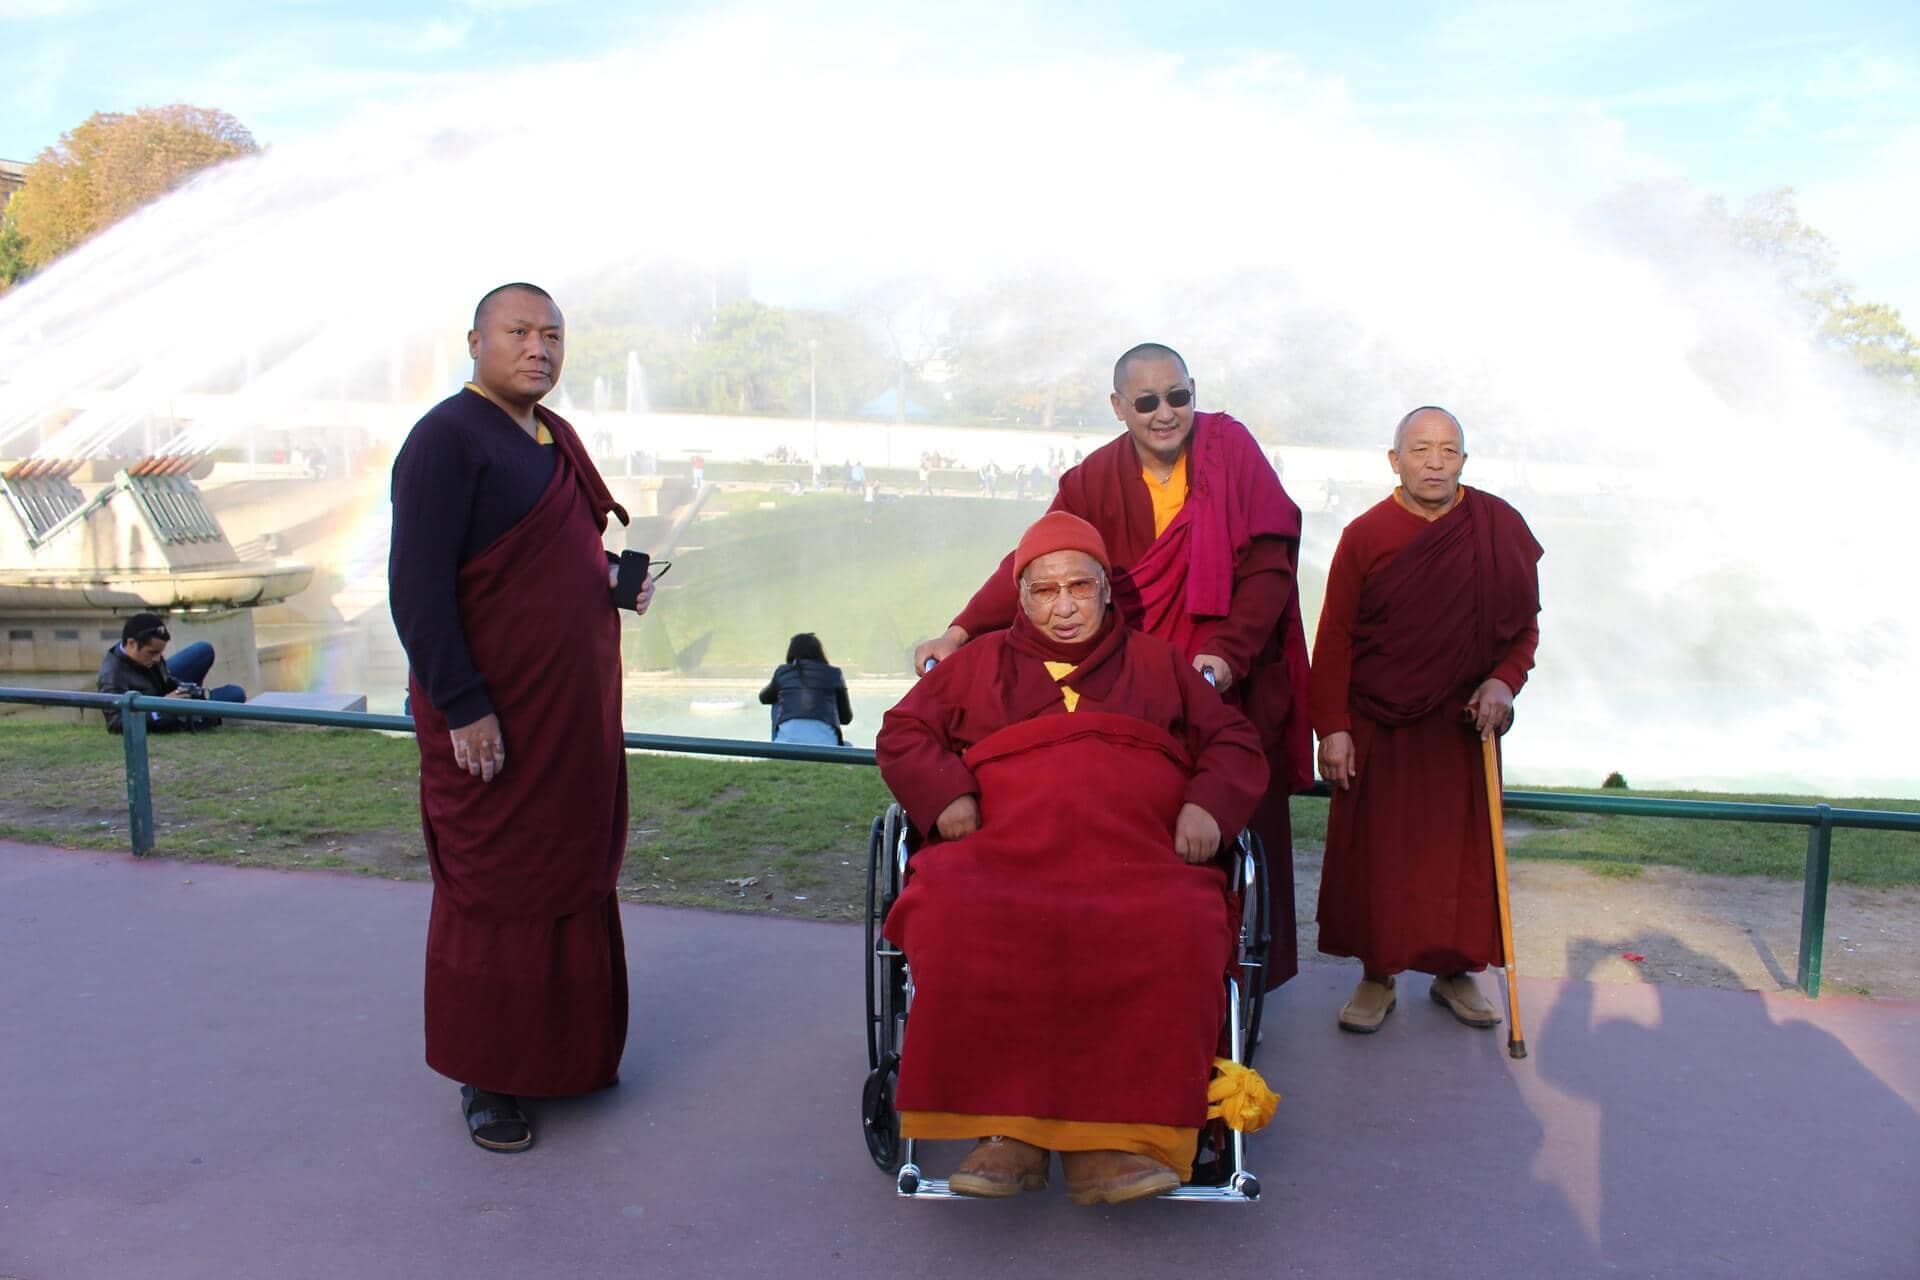 Taklung Tsetrul Rinpoche, Tulku Drakpa, Dzogchen Ranyak Patrul Rinpoche